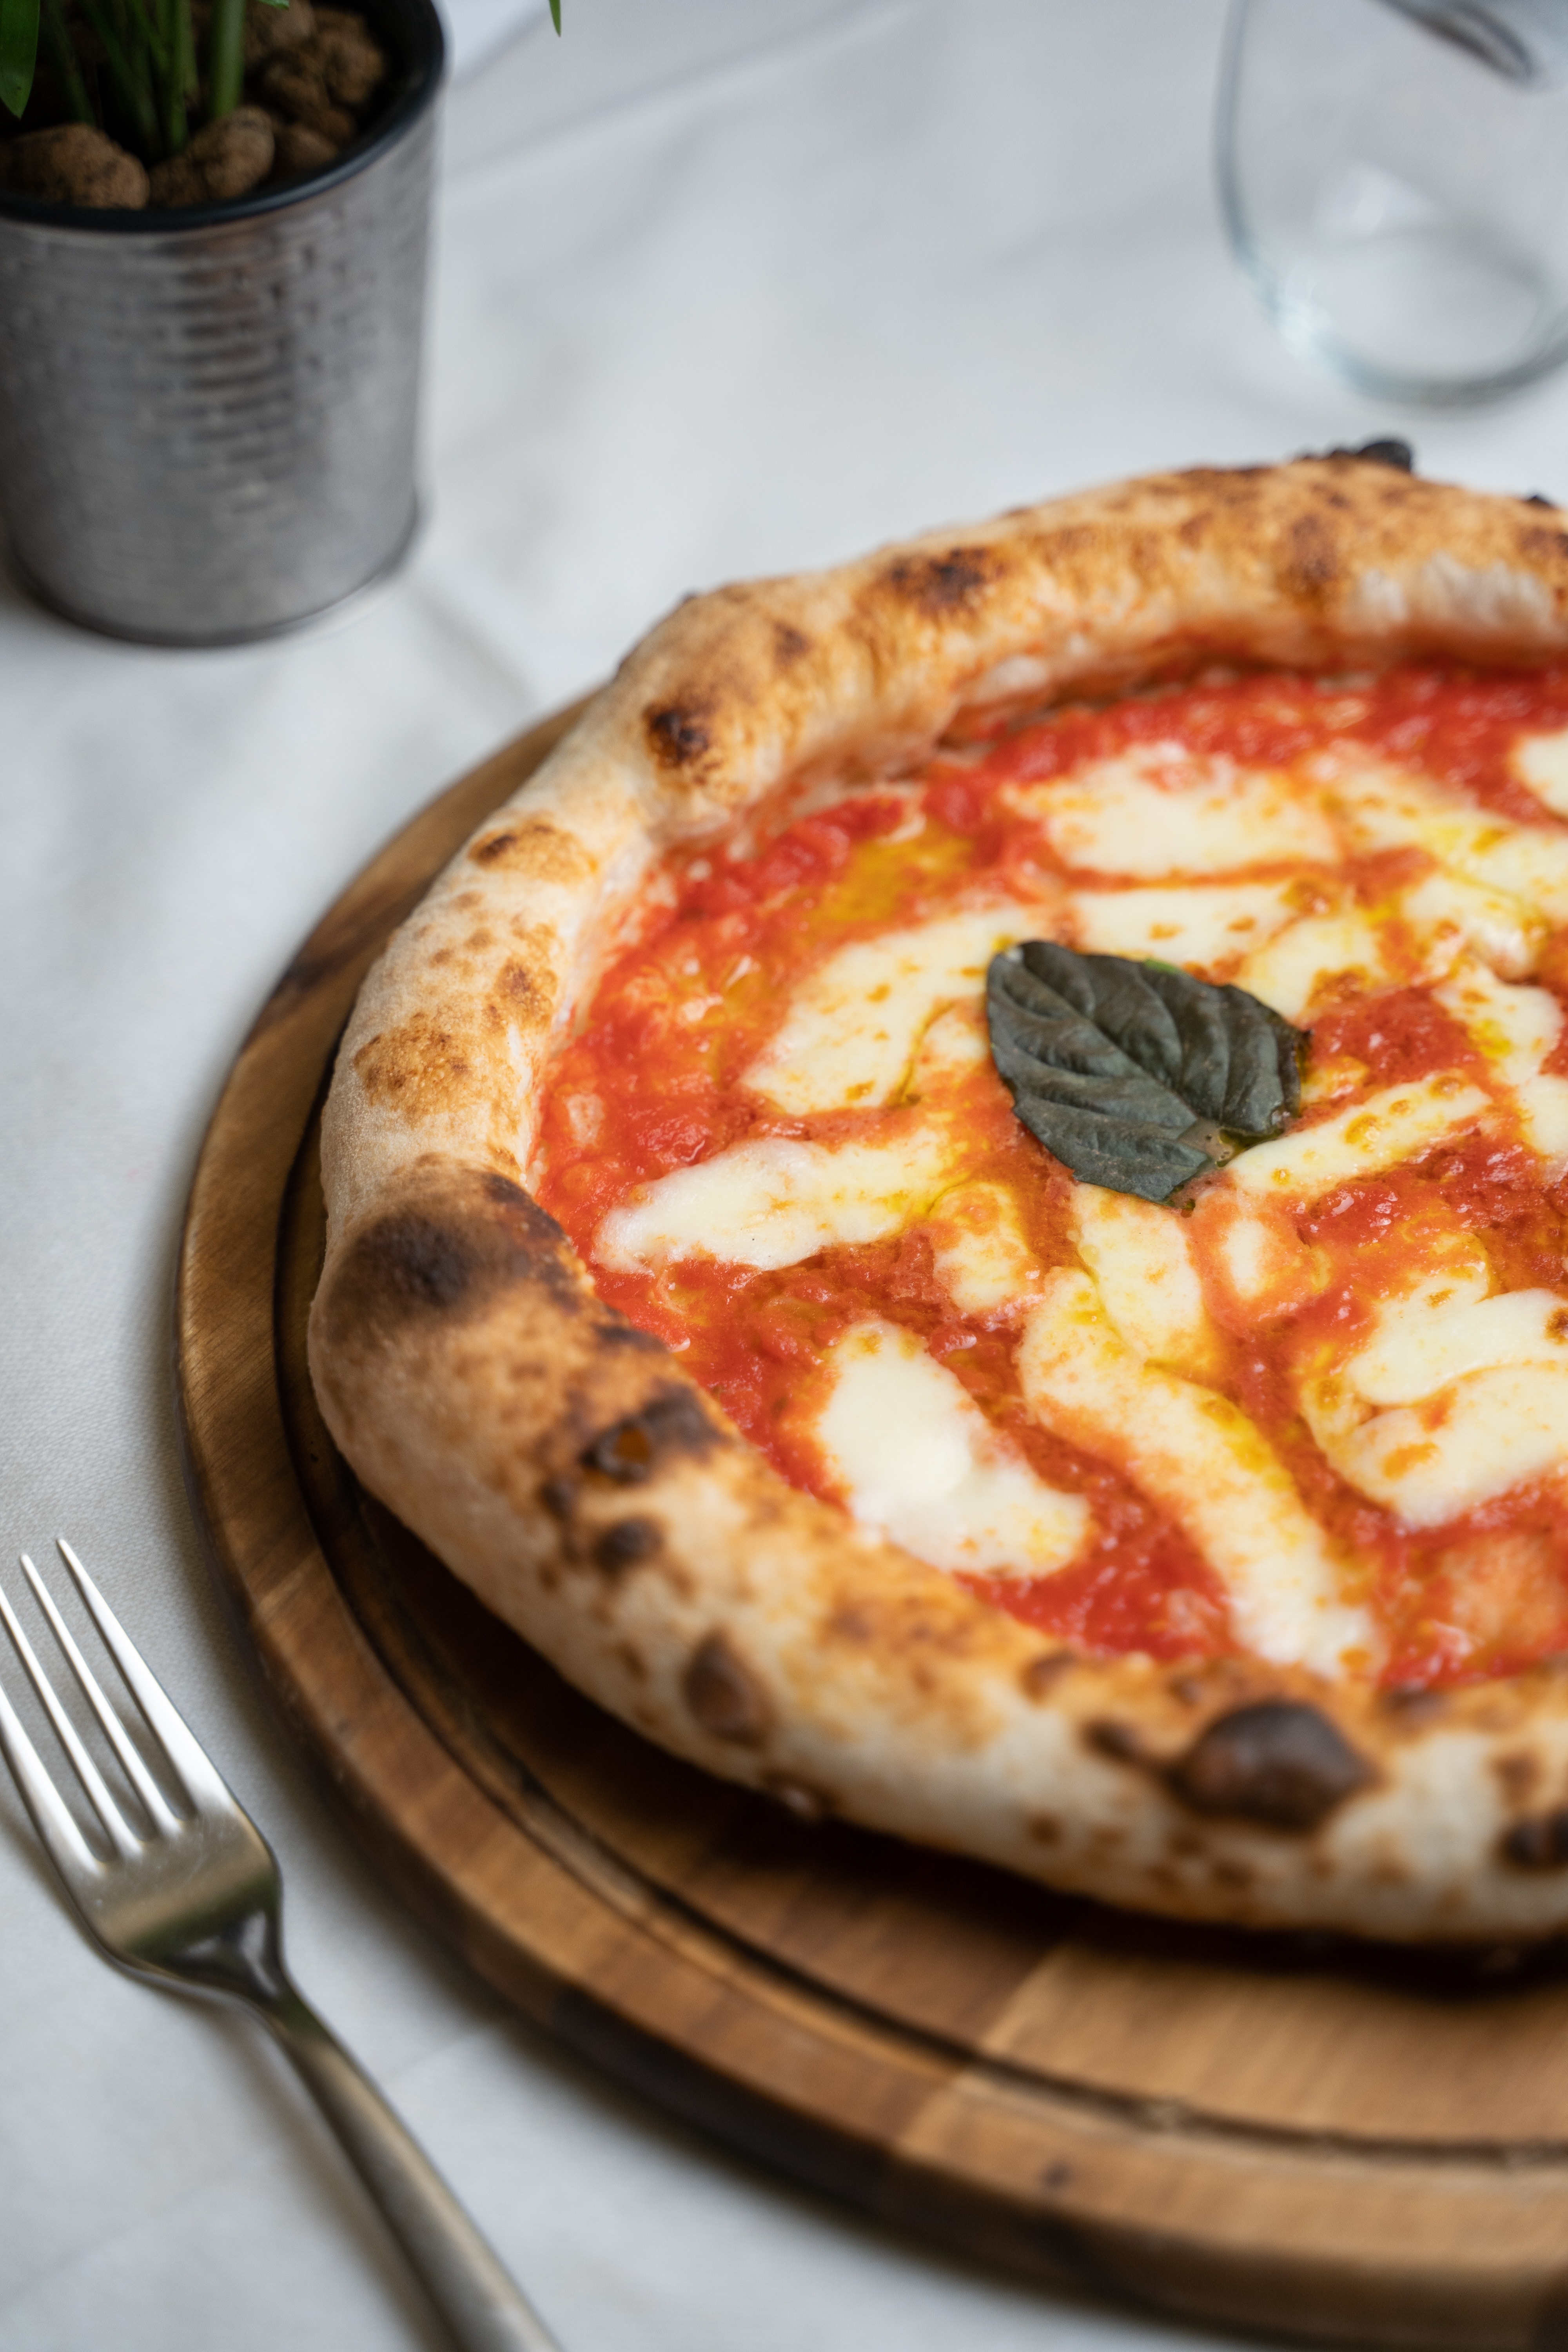 15 Best Pizzerias in Naples (and Campania Region) According to Locals!